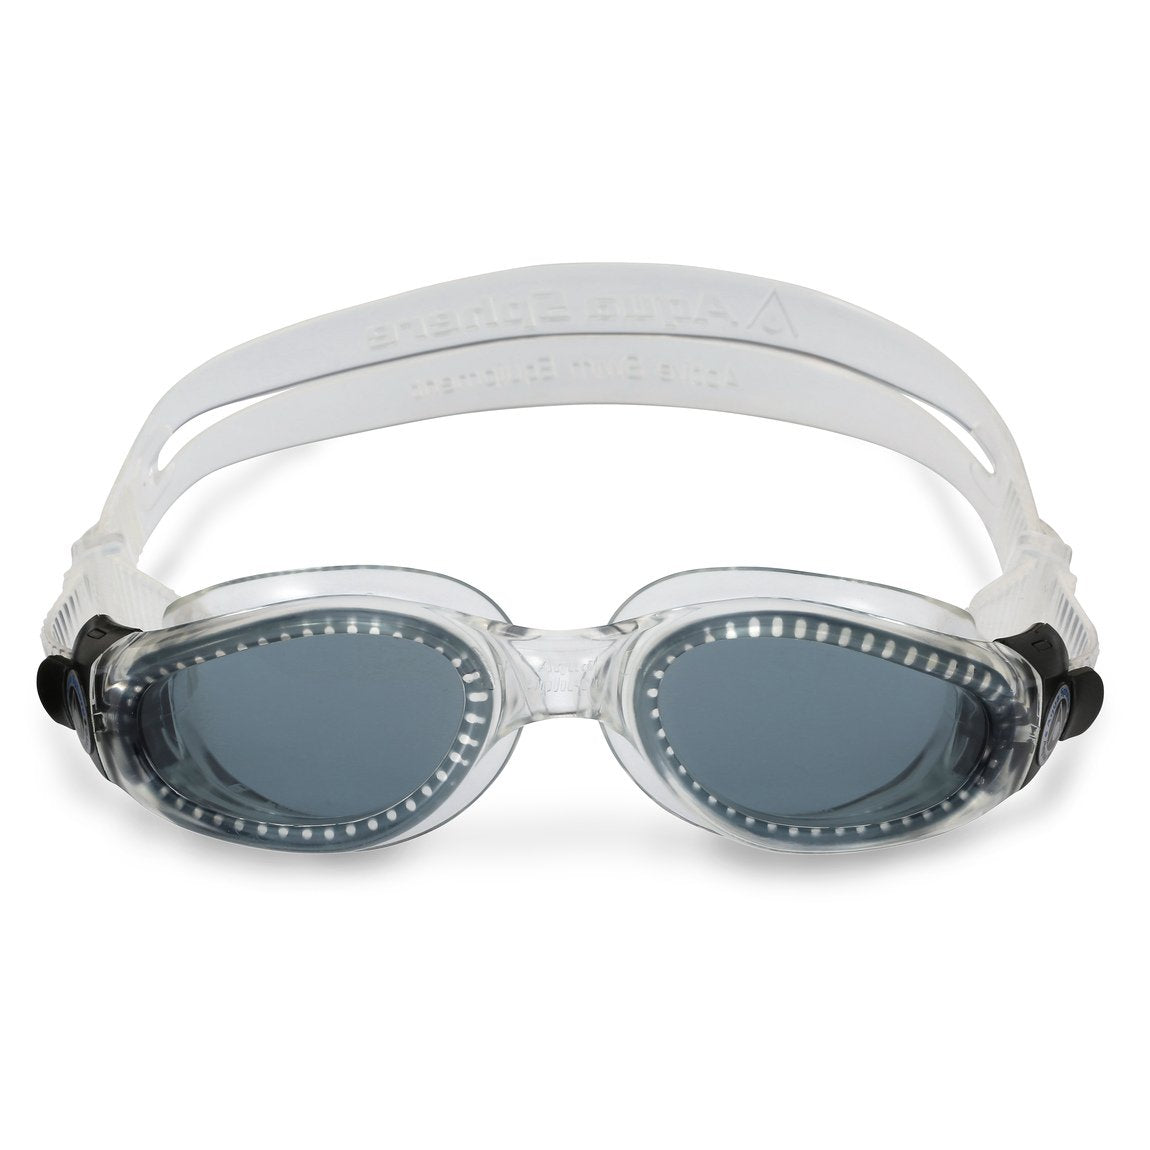 AquaSphere Kaiman Swim Goggle - Smoke